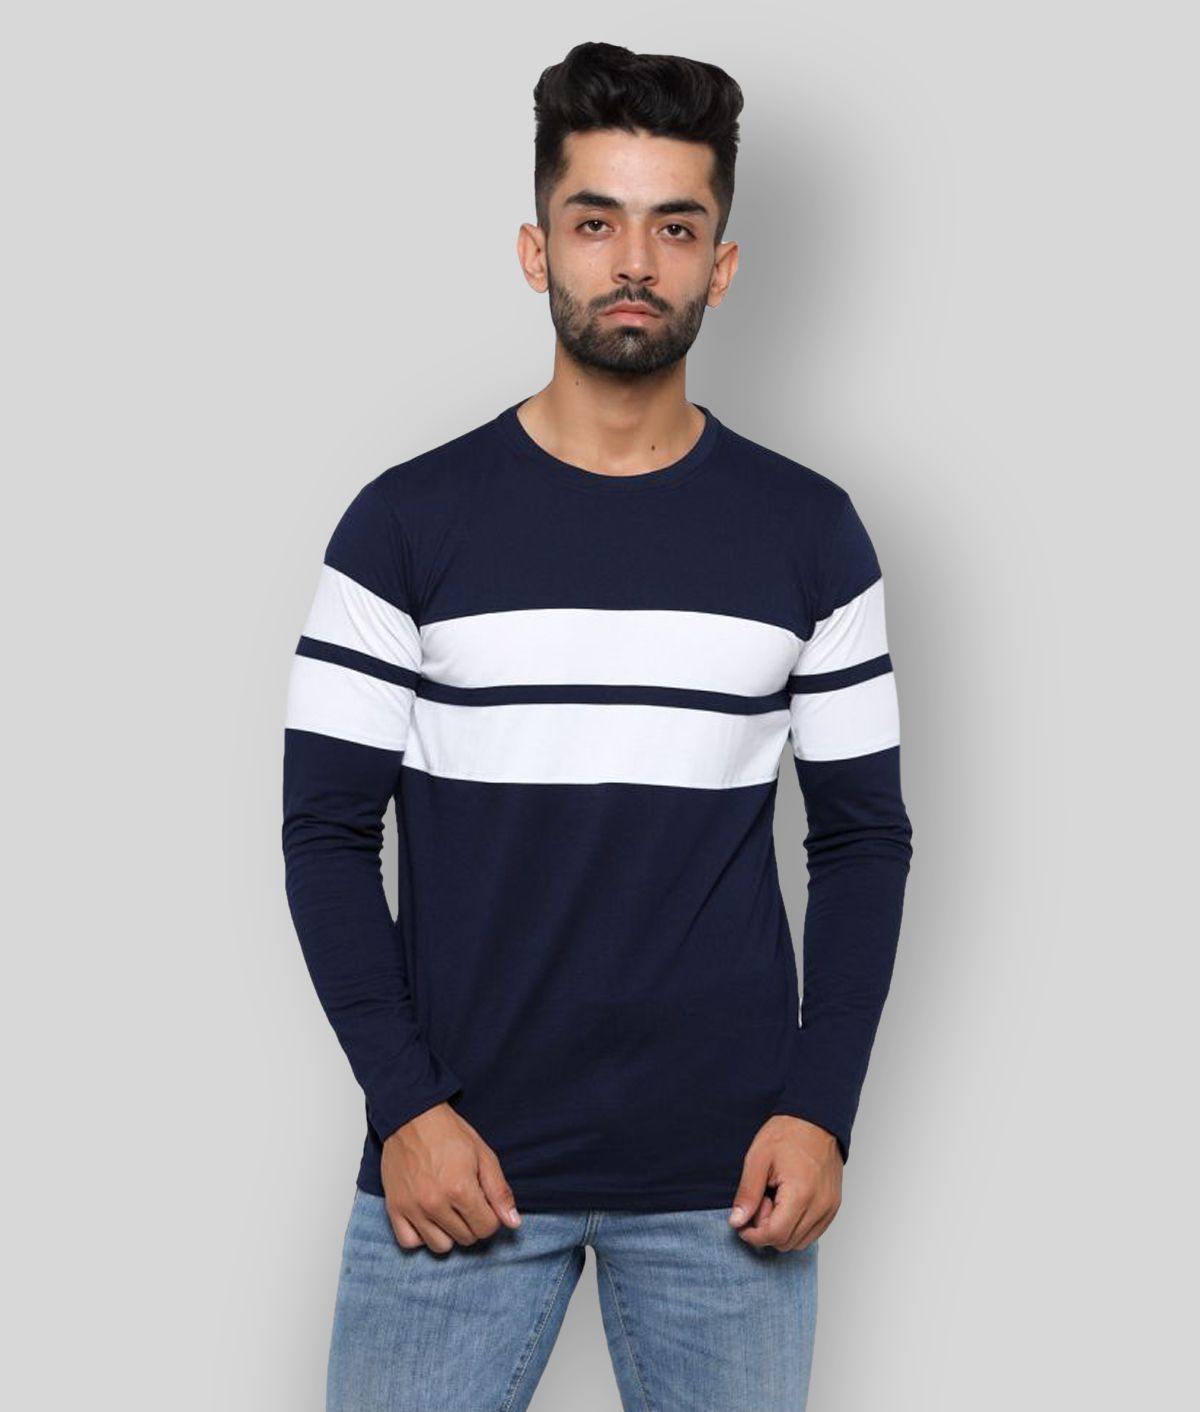 MADTEE - Navy Blue Cotton Blend Regular Fit Men's T-Shirt ( Pack of 1 )